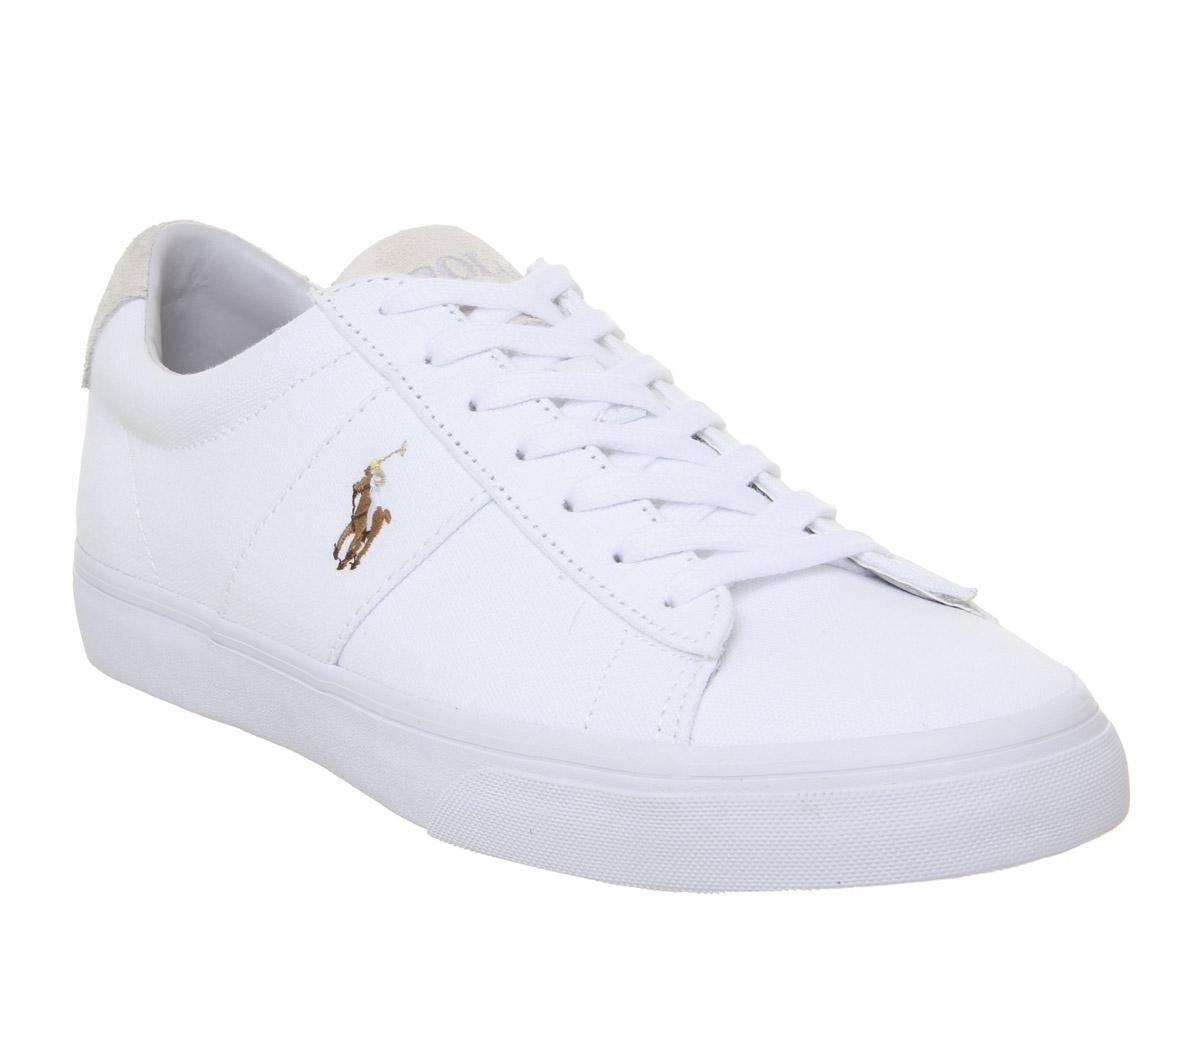 Ralph Lauren Sayer Sneakers White - His 